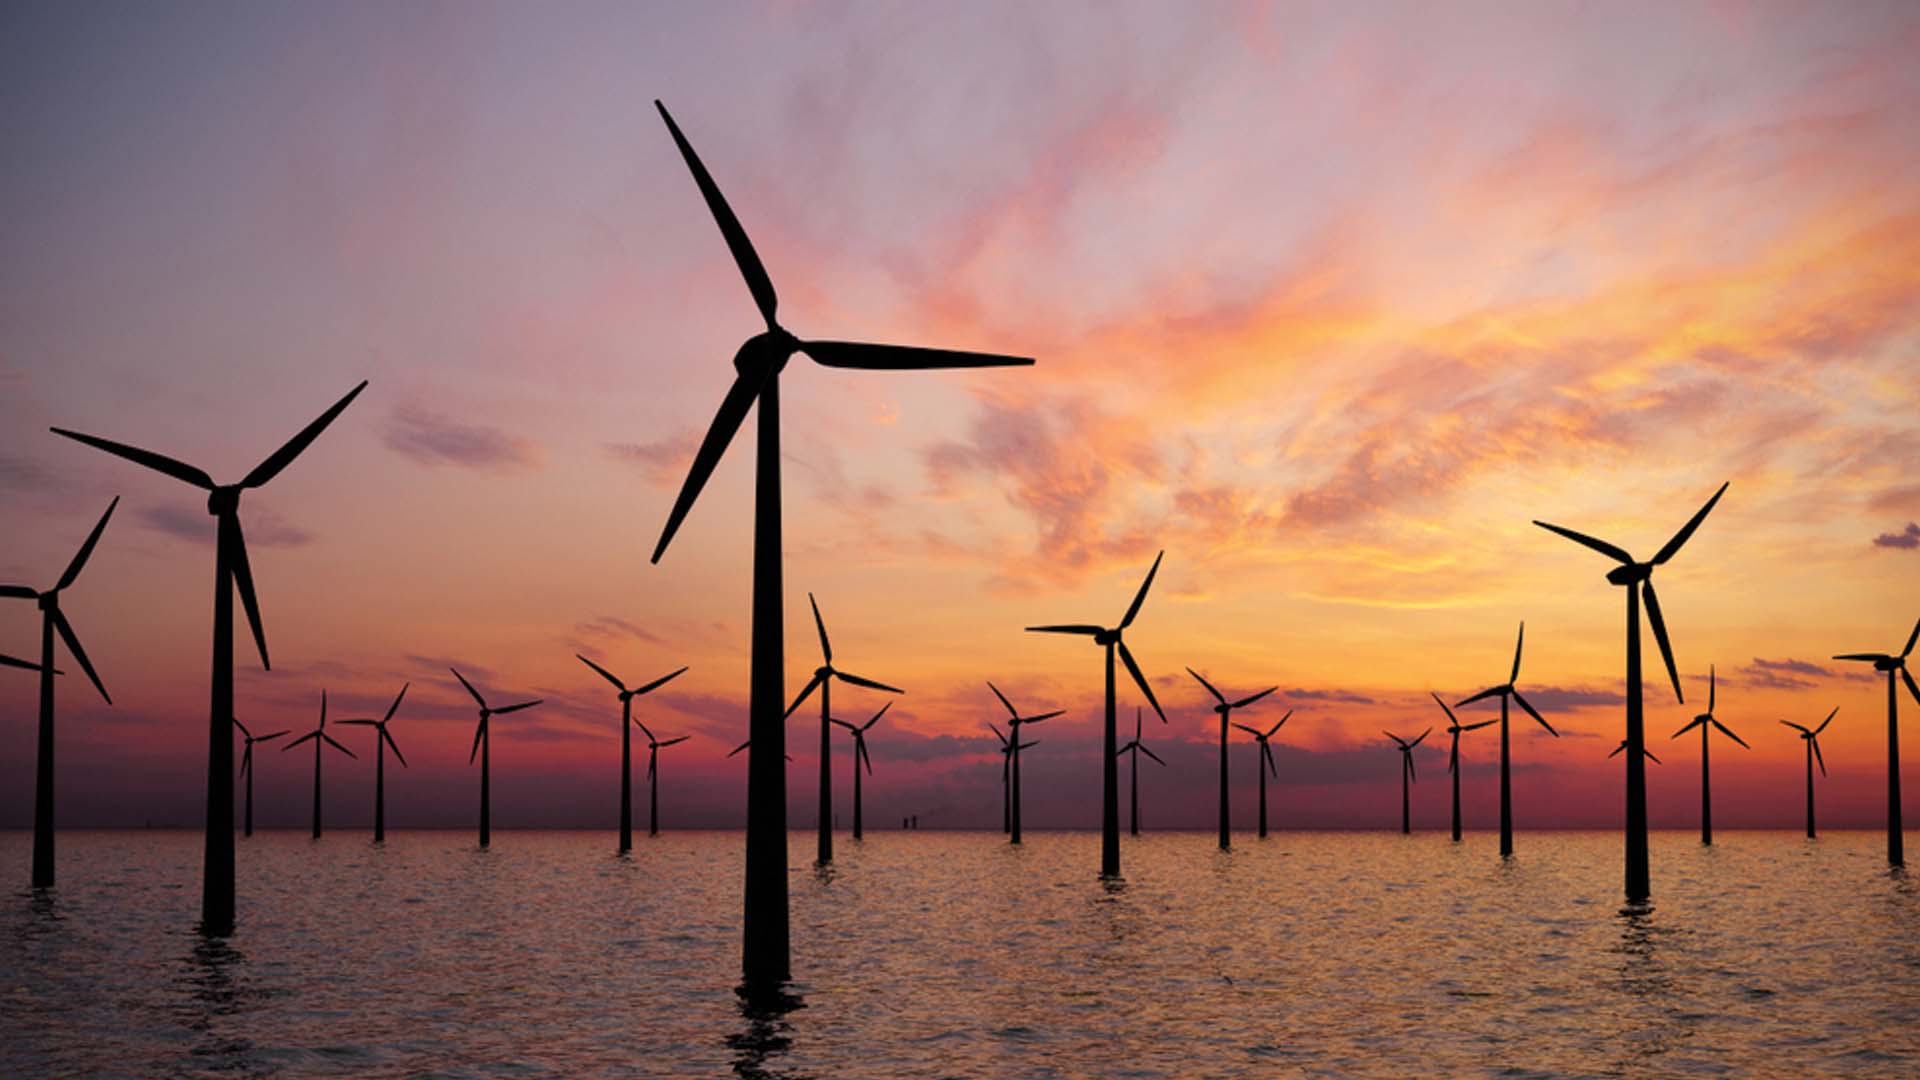 Off-shore wind farm, a way to reach the net-zero carbon emission goal